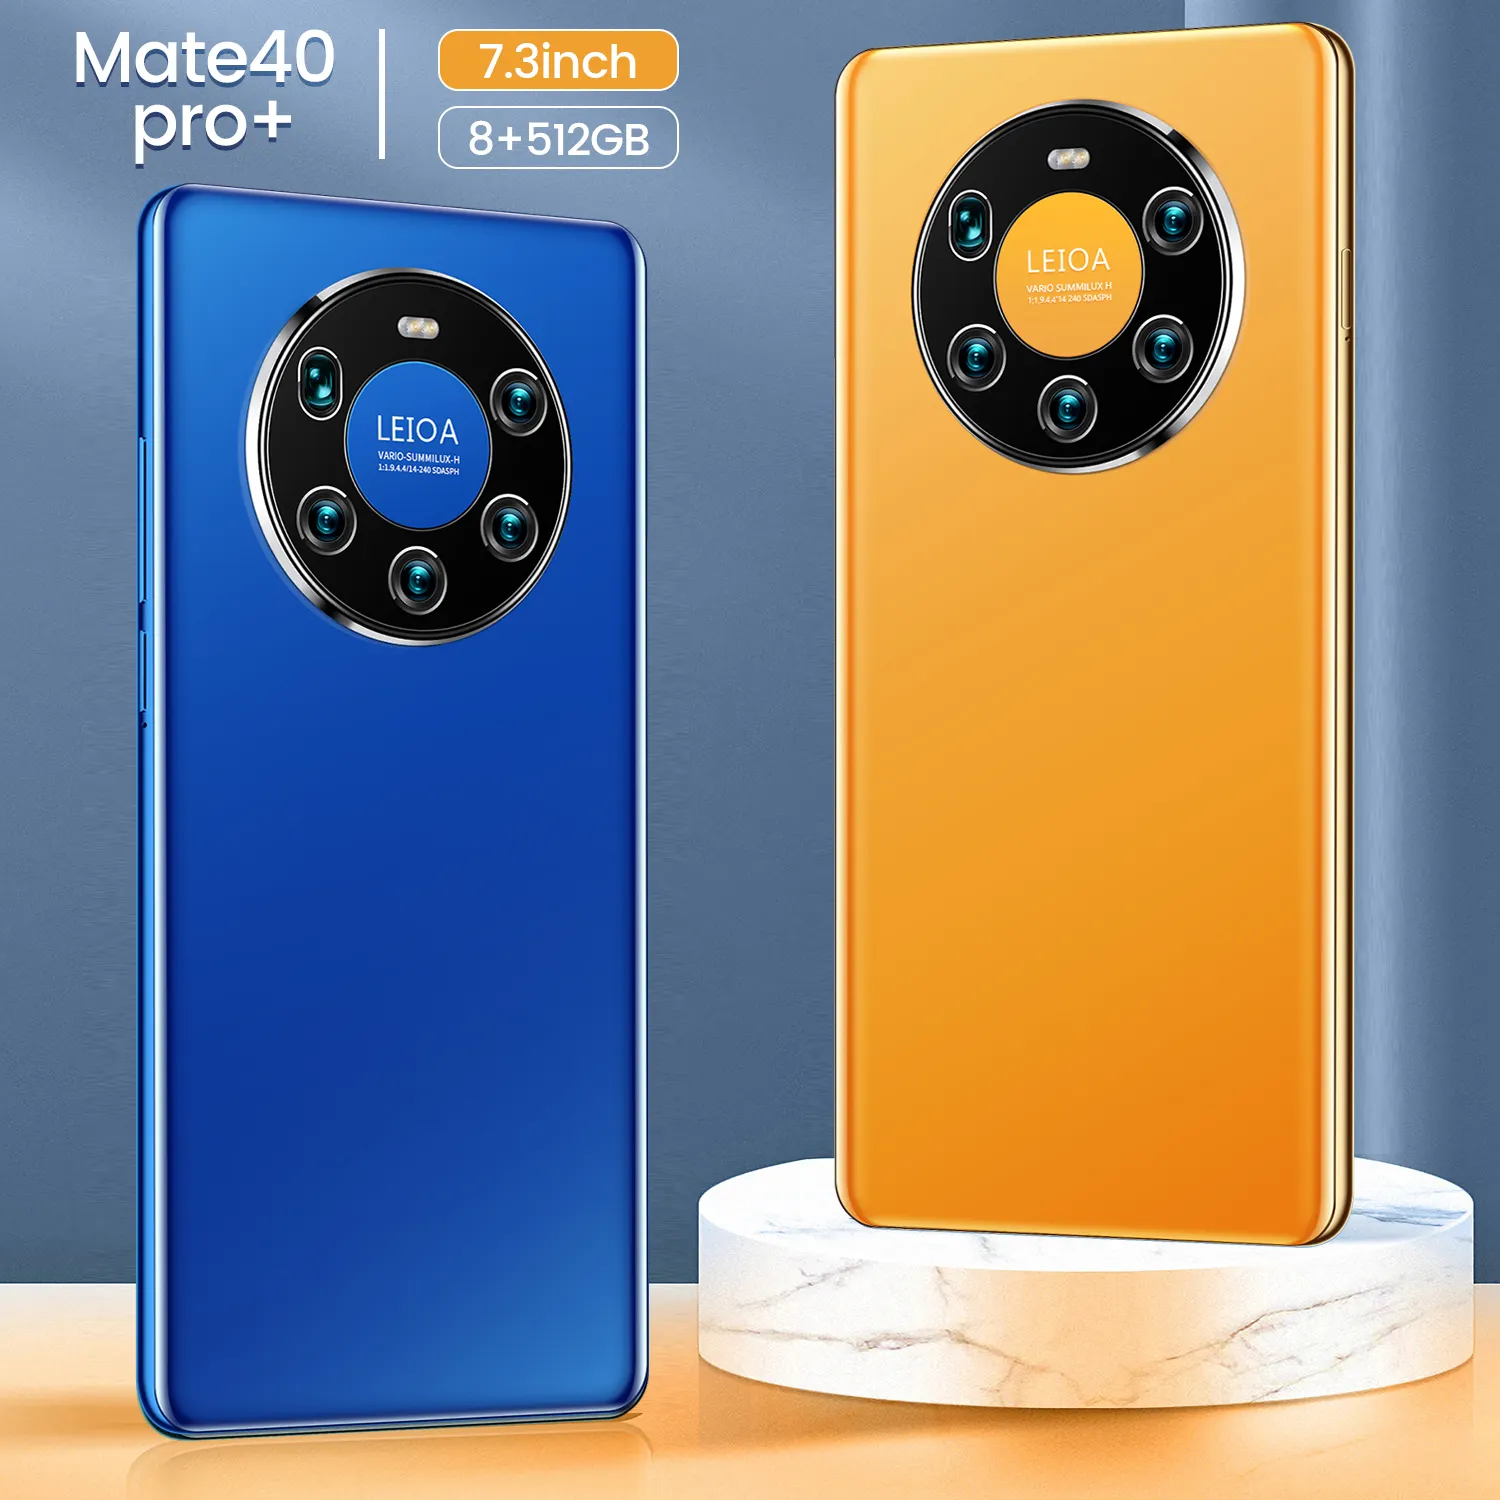 2021 खुला मोबाइल M40 प्रो + एच. डी. कैमरा दोहरी सिम 12GB + 512GB दोहरी कार्ड 7.2 पूर्ण-स्क्रीन वैश्विक Telefones Celulares स्मार्टफोन